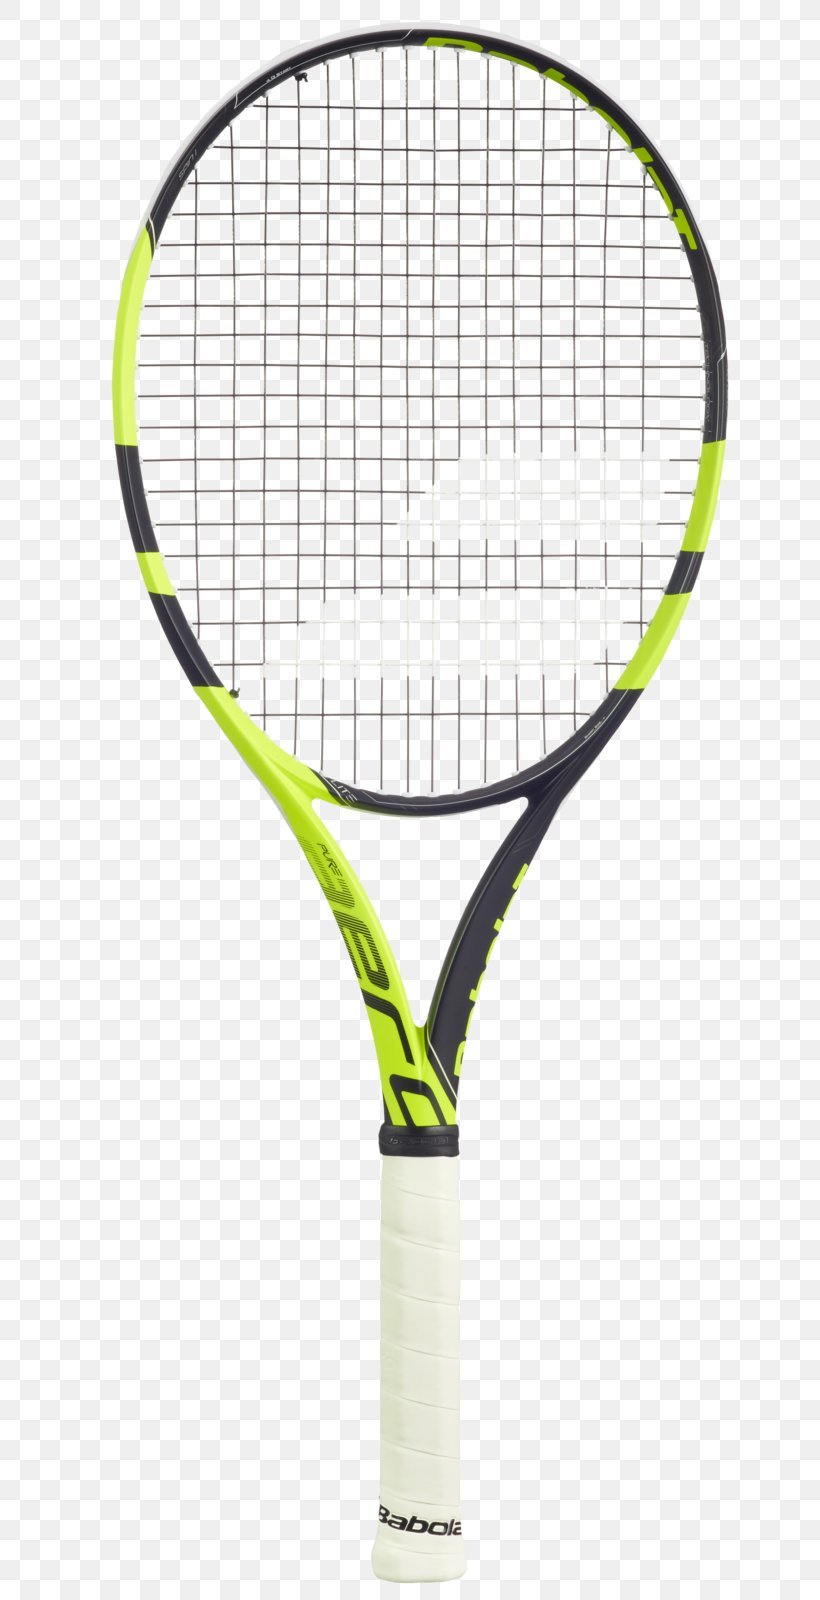 Babolat Racket Tennis Rakieta Tenisowa Sporting Goods, PNG, 700x1600px, Babolat, Badminton, Grip, Head, Racket Download Free